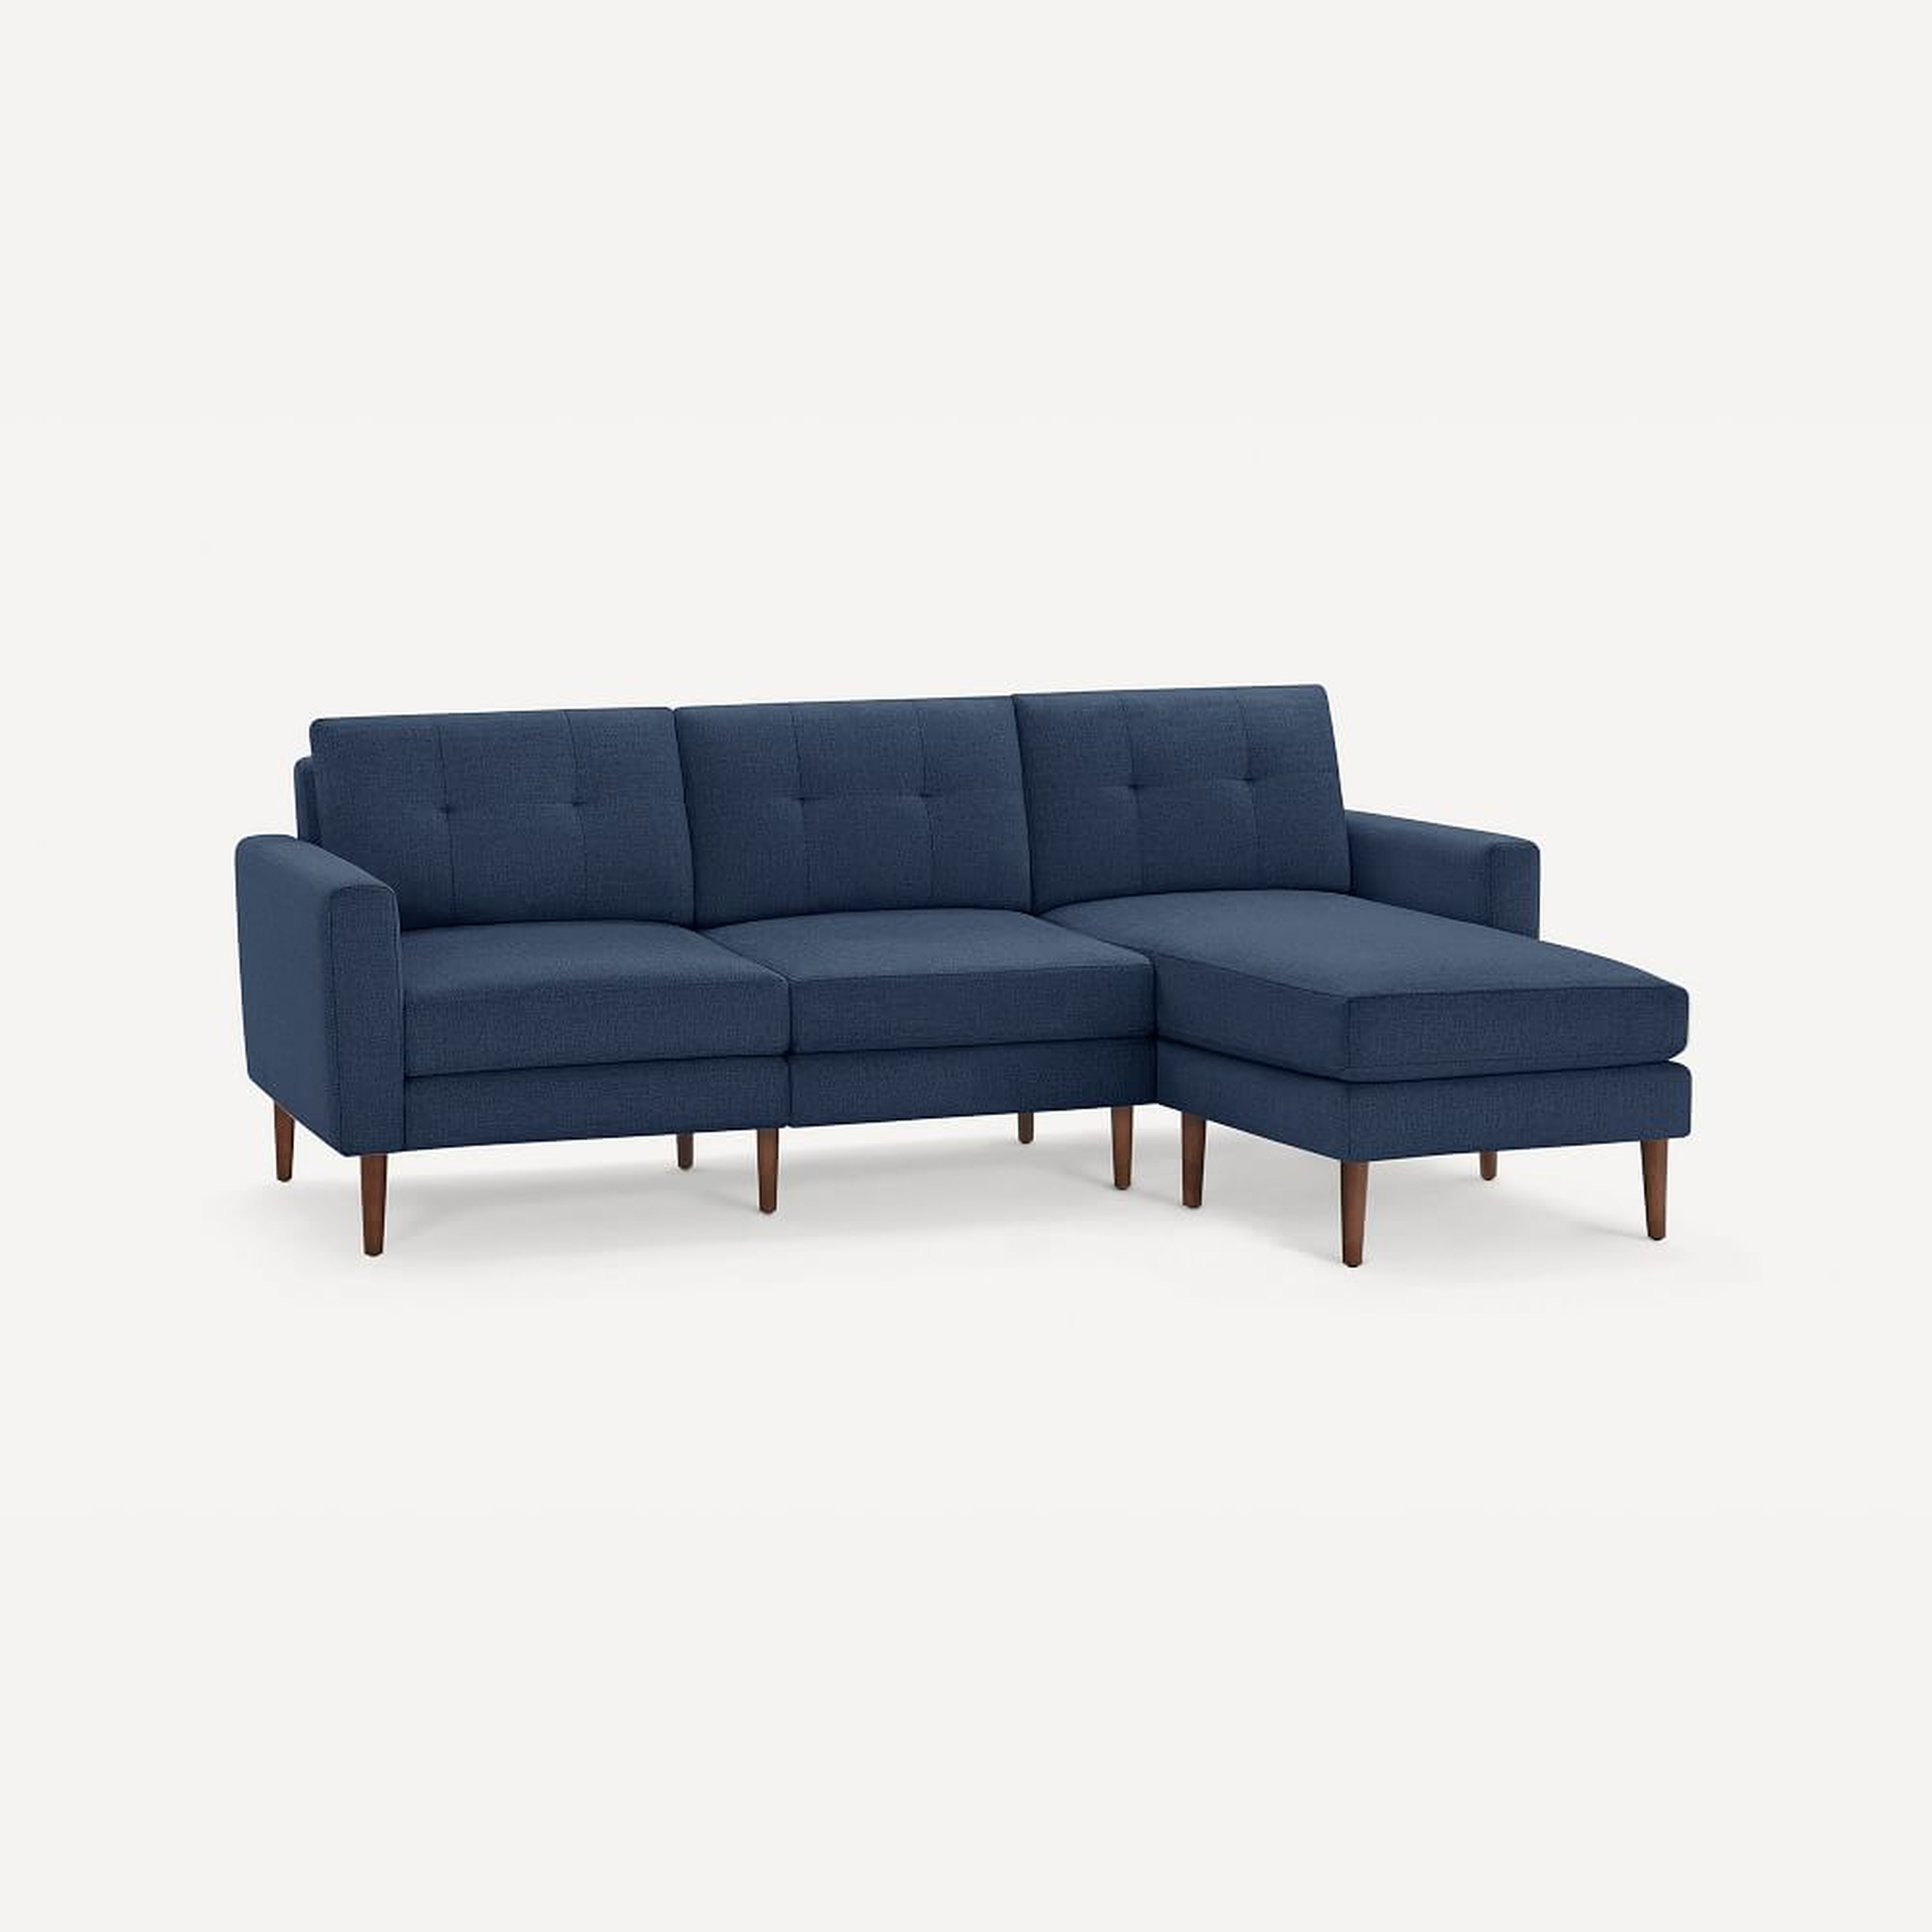 Nomad Block Fabric Sofa with Chaise, Olefin, Navy Blue, Walnut Wood - West Elm